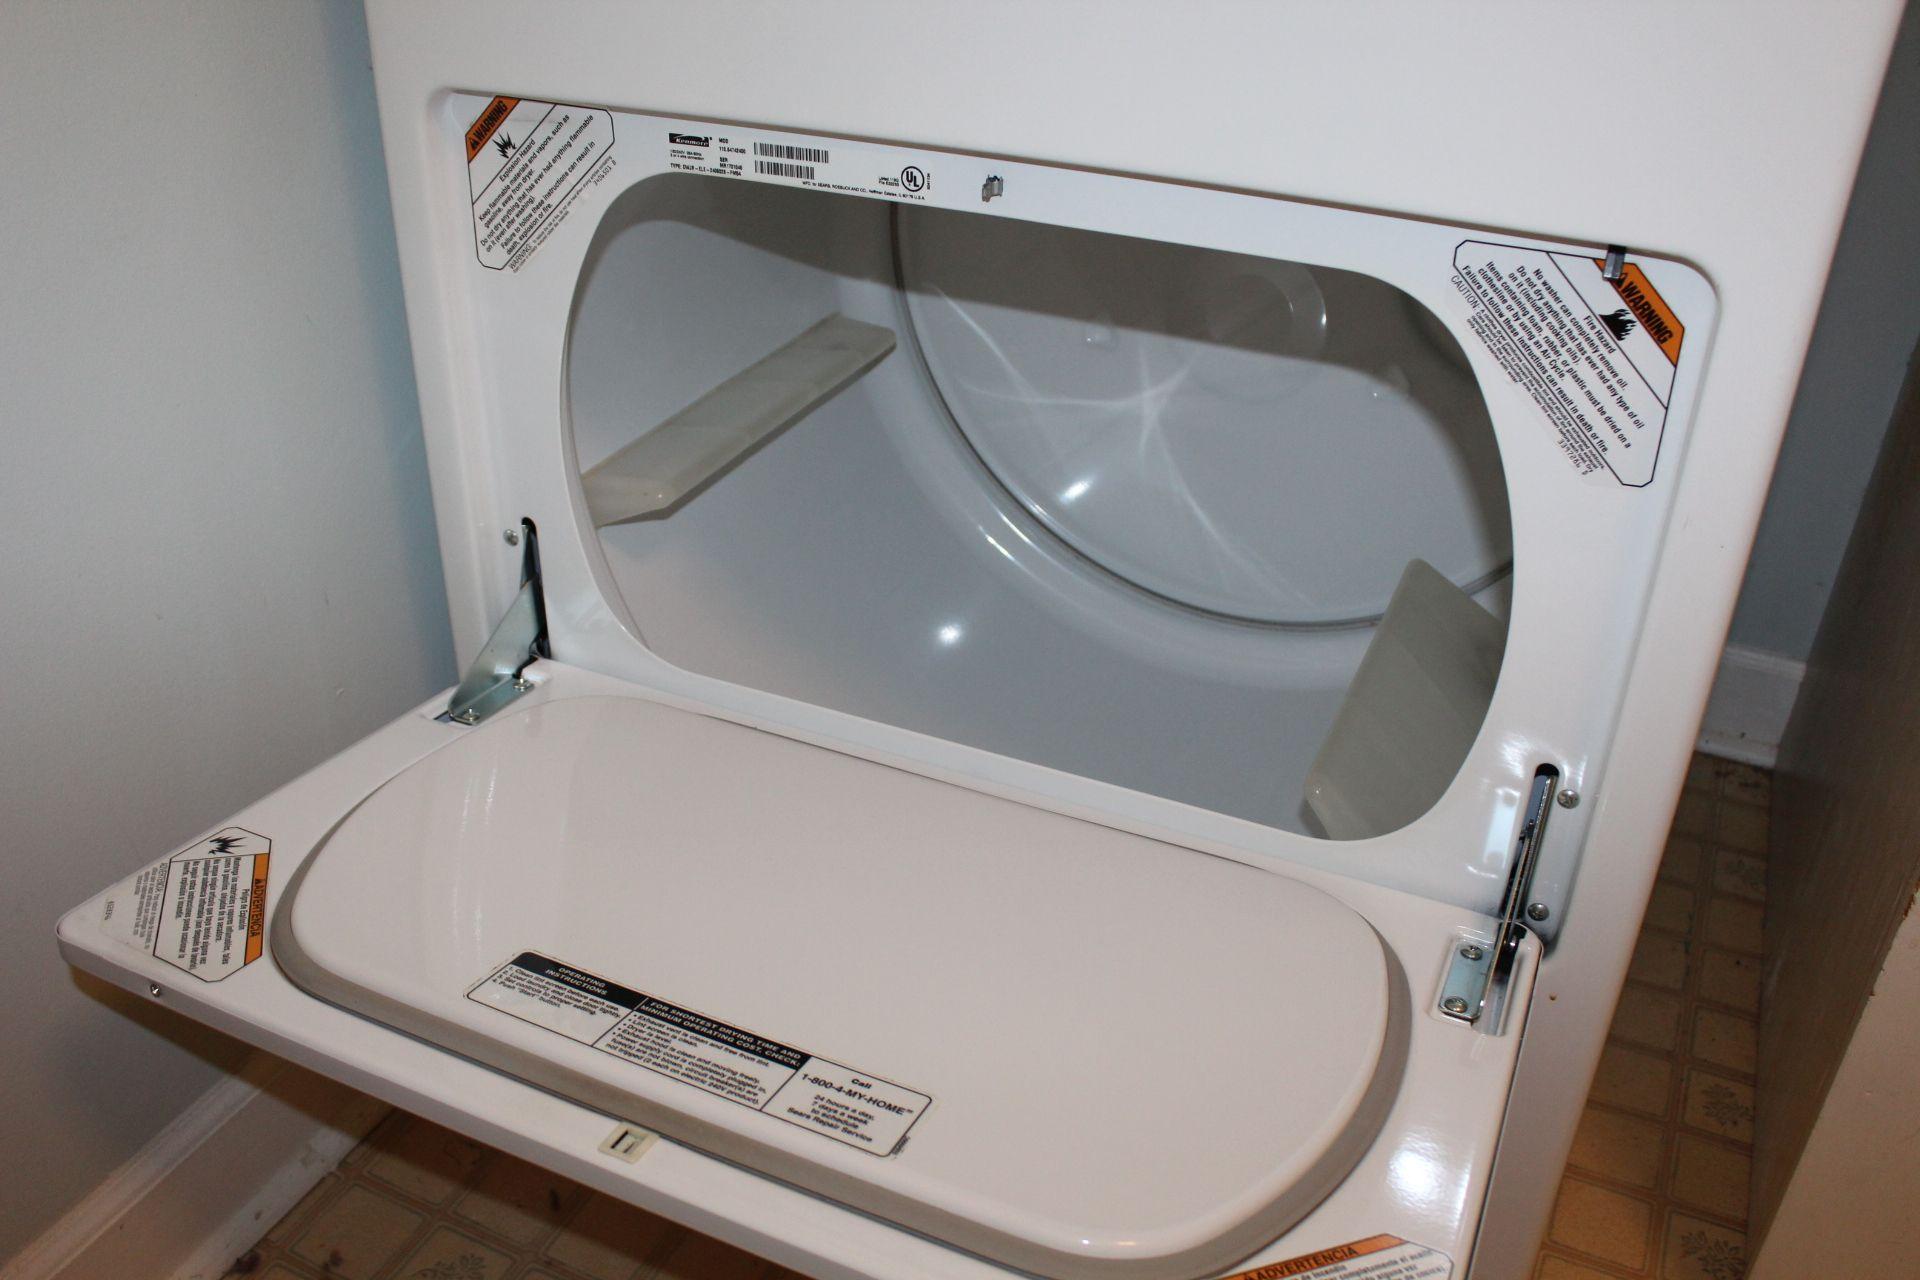 Kenmore 70 Series Heavy Duty Super Capacity Dryer.